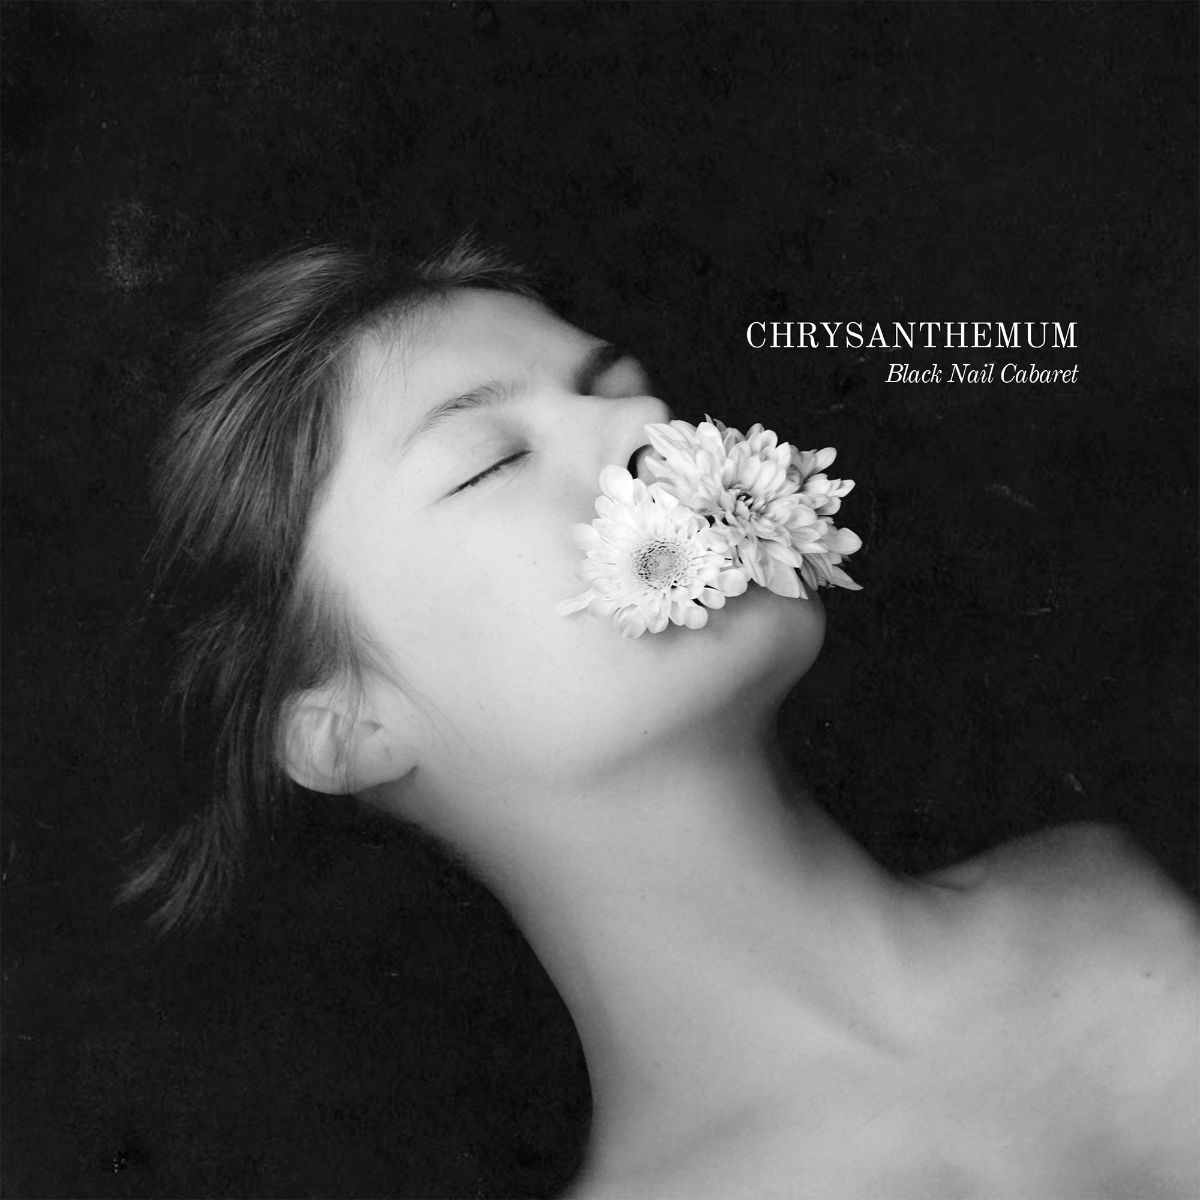 Black Nail Cabaret: Neue Video-Single "Autogenic" + Album "Chrysanthemum" @ Sonic Seducer